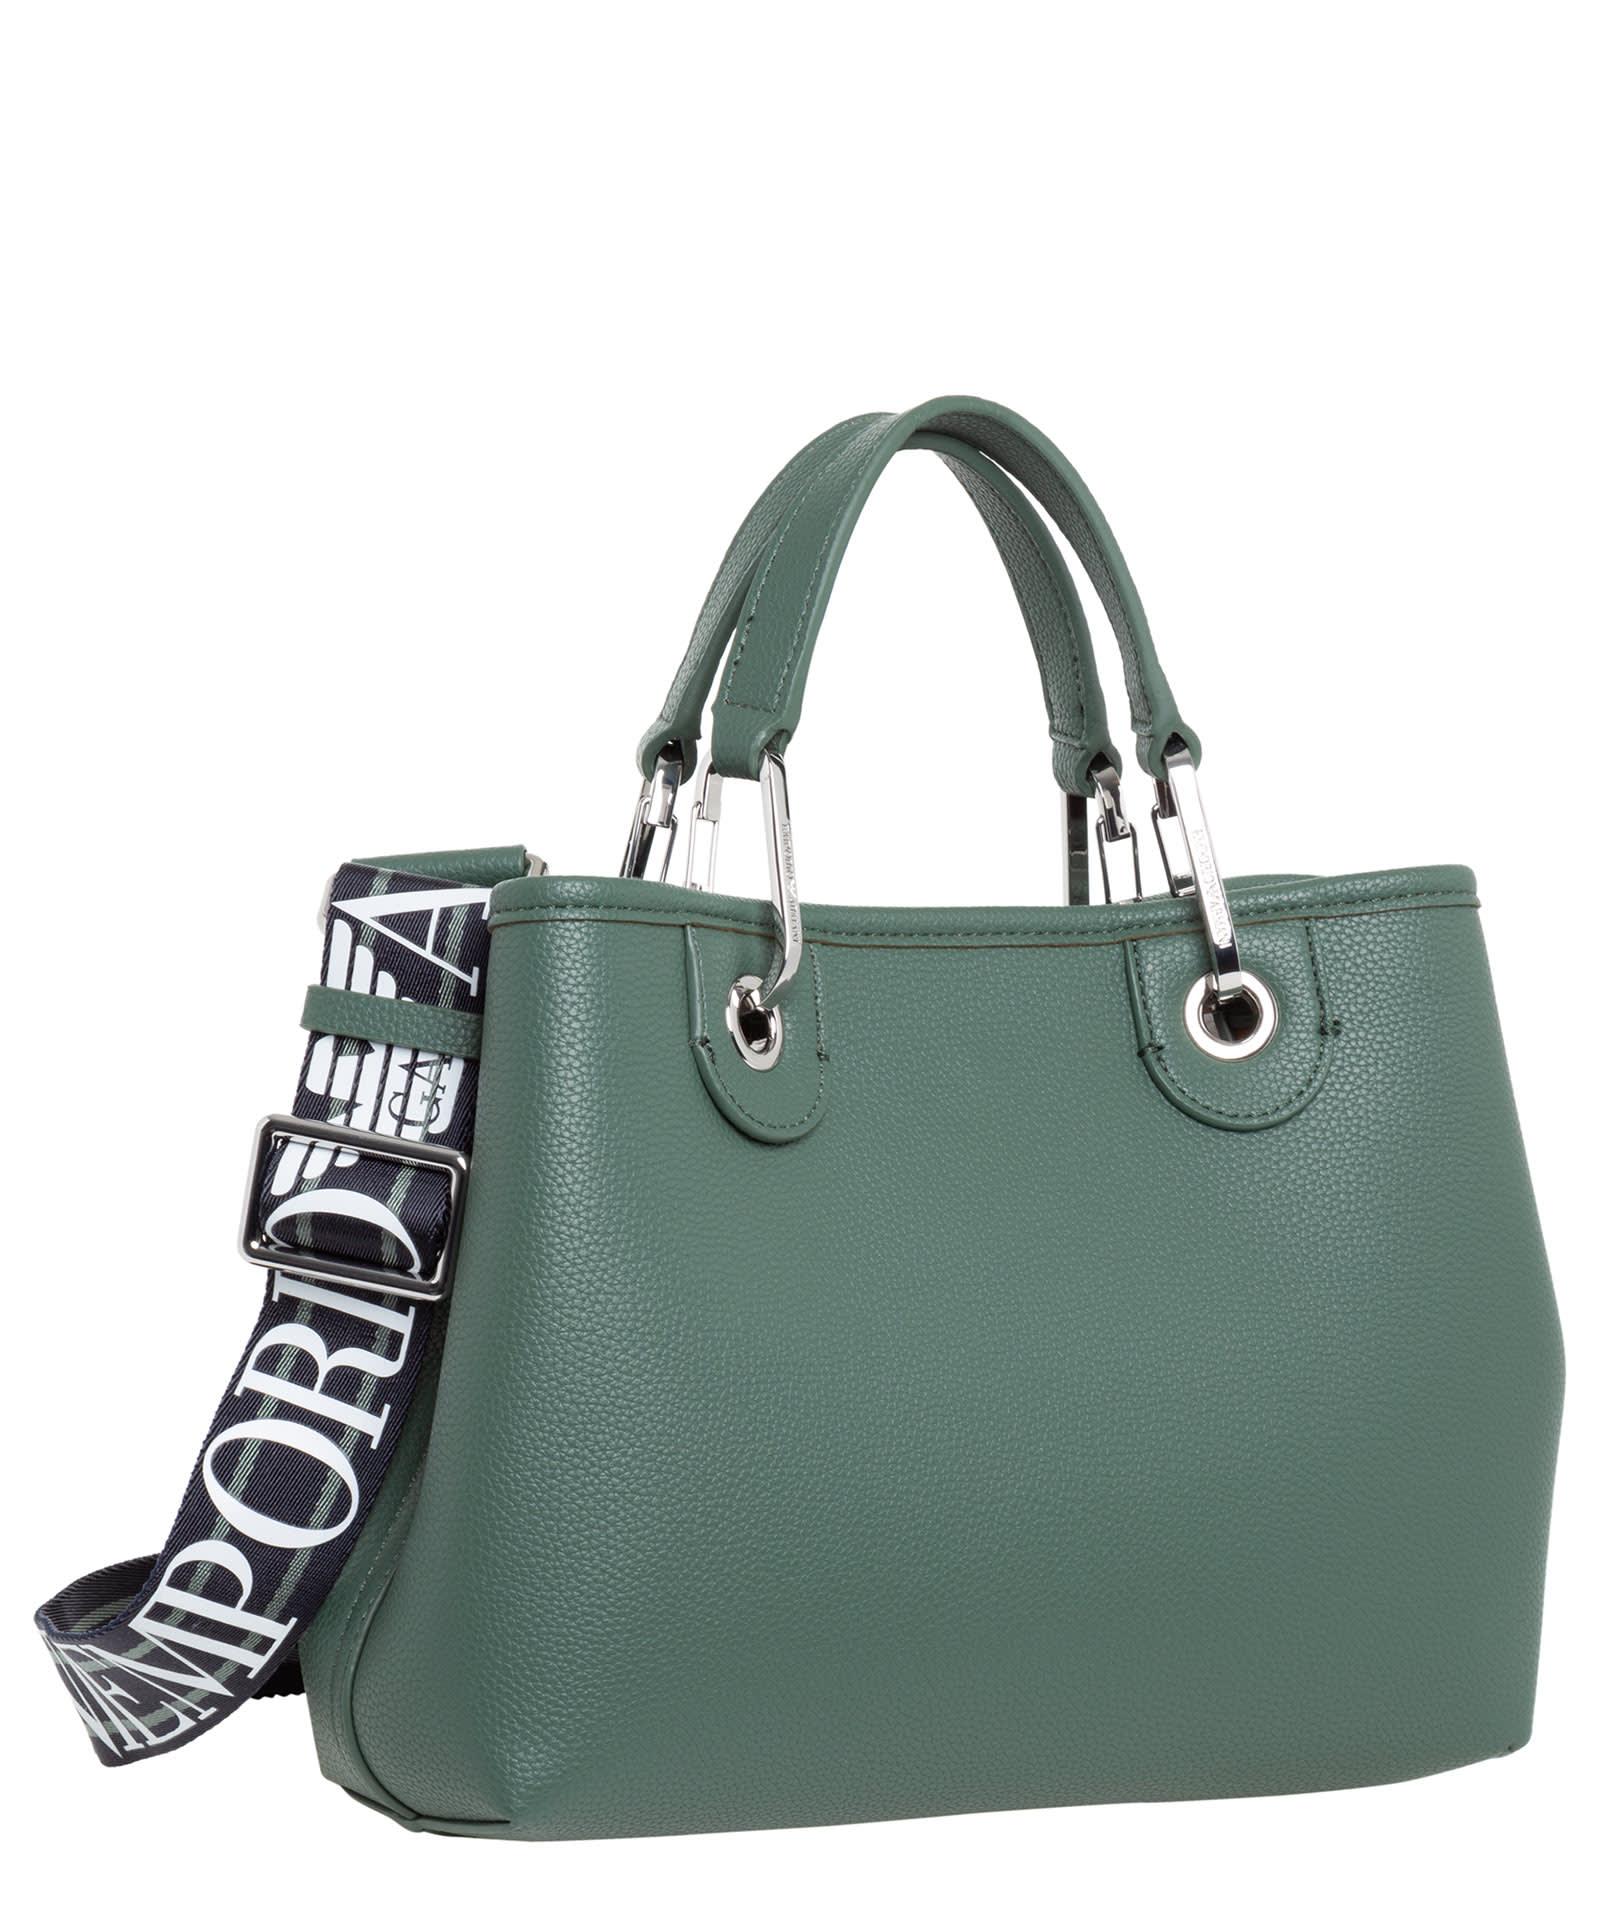 Emporio Armani Myea Handbag in Green | Lyst